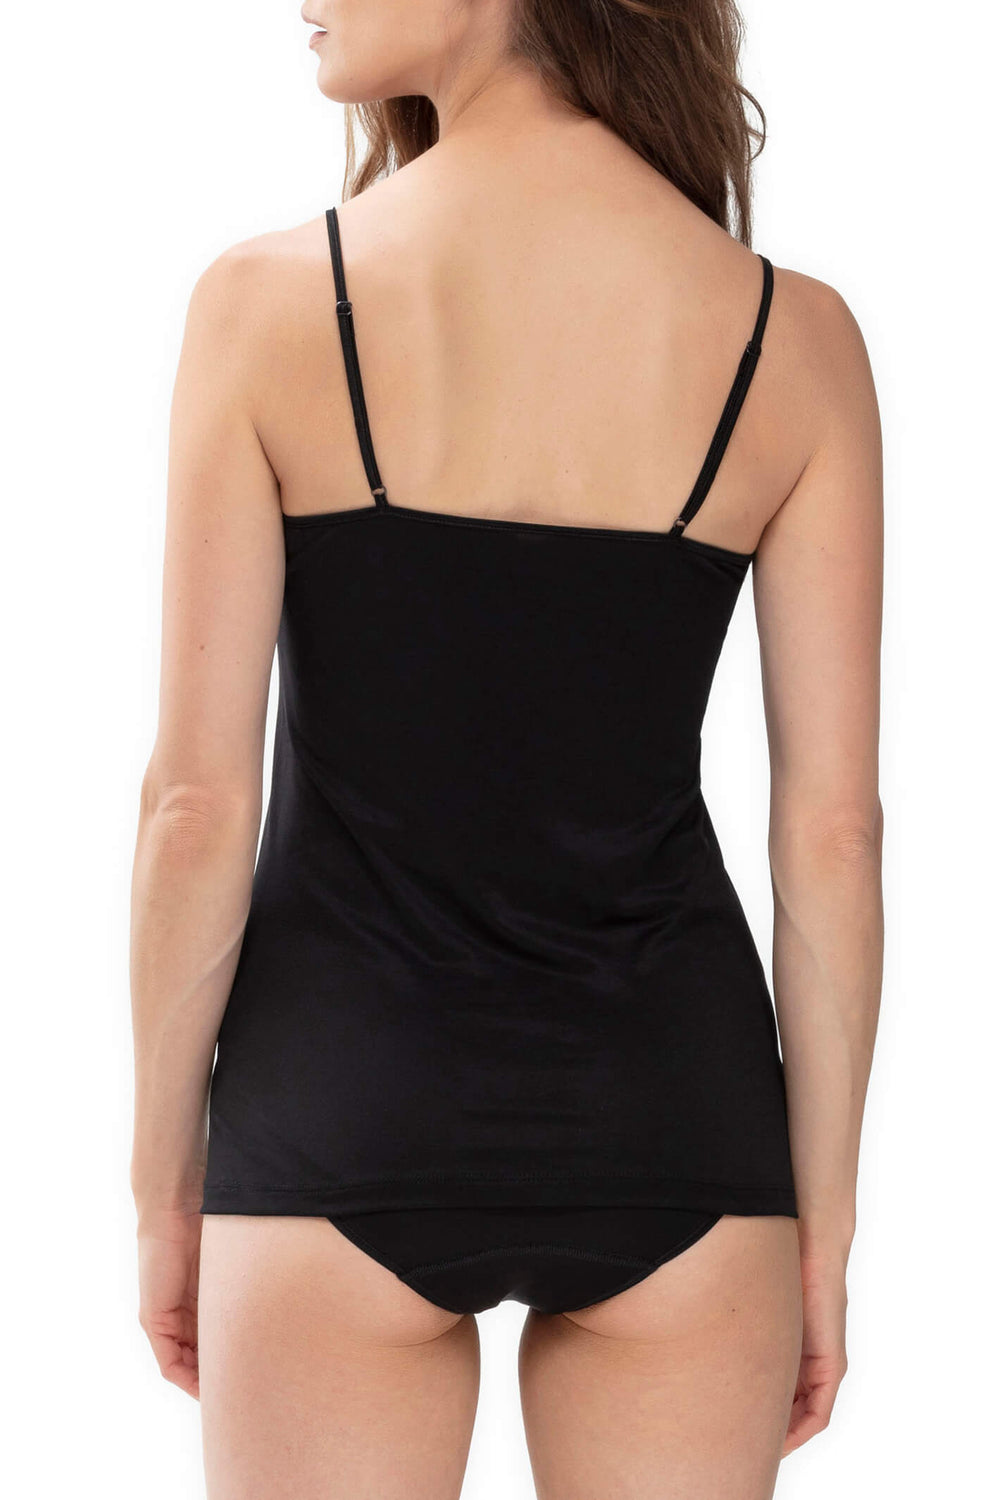 Mey 55201 Black Spaghetti Strap Vest Top - Olivia Grace Fashion